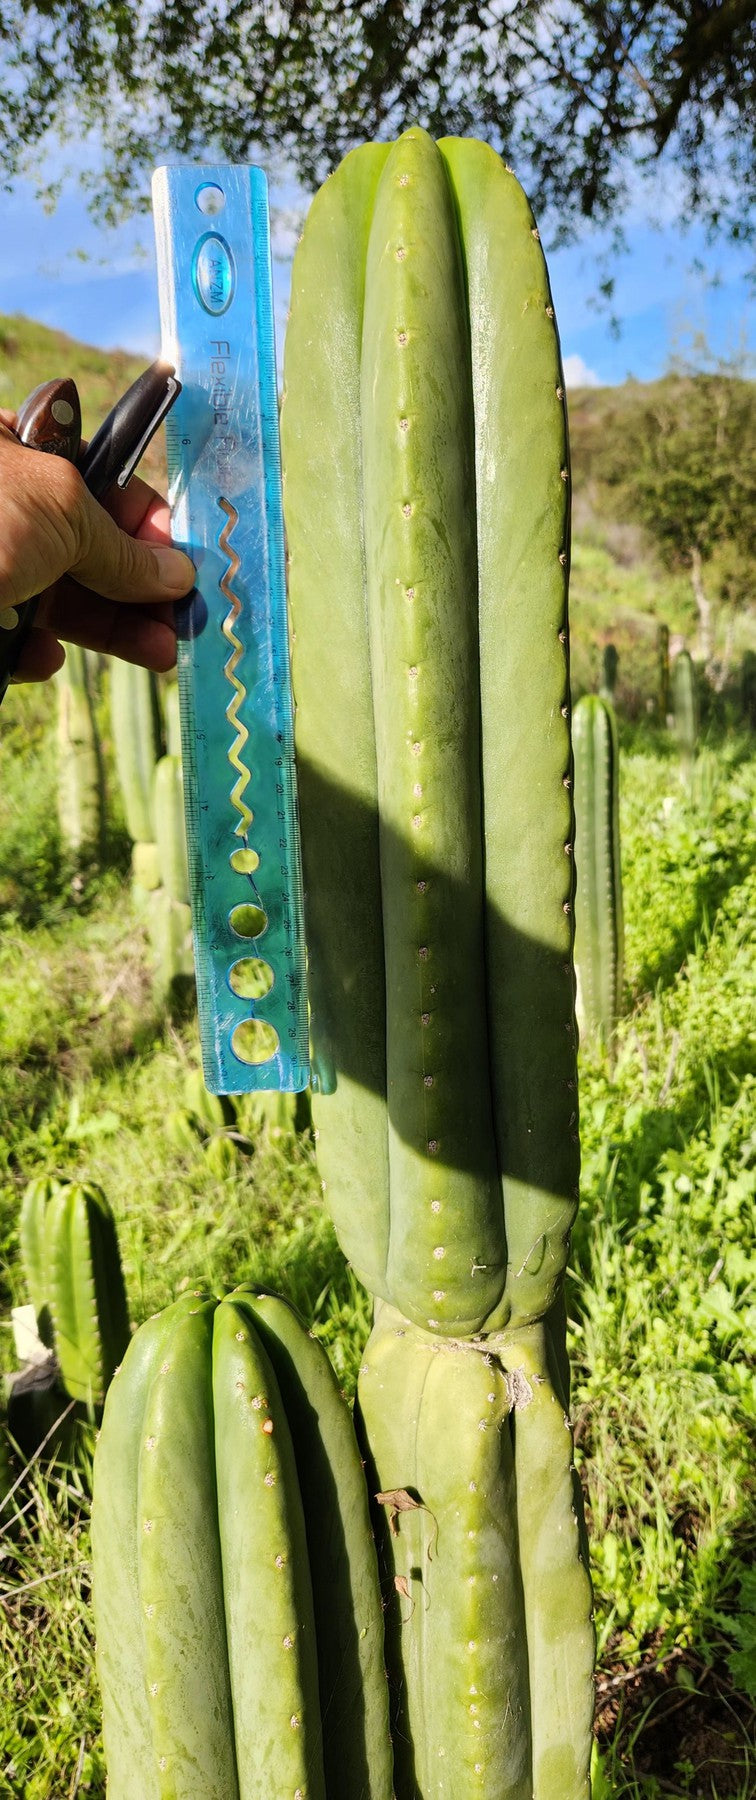 #EC339 EXACT Trichocereus hybrid Scop X Pachanoi Yowie Cactus Cutting 12"